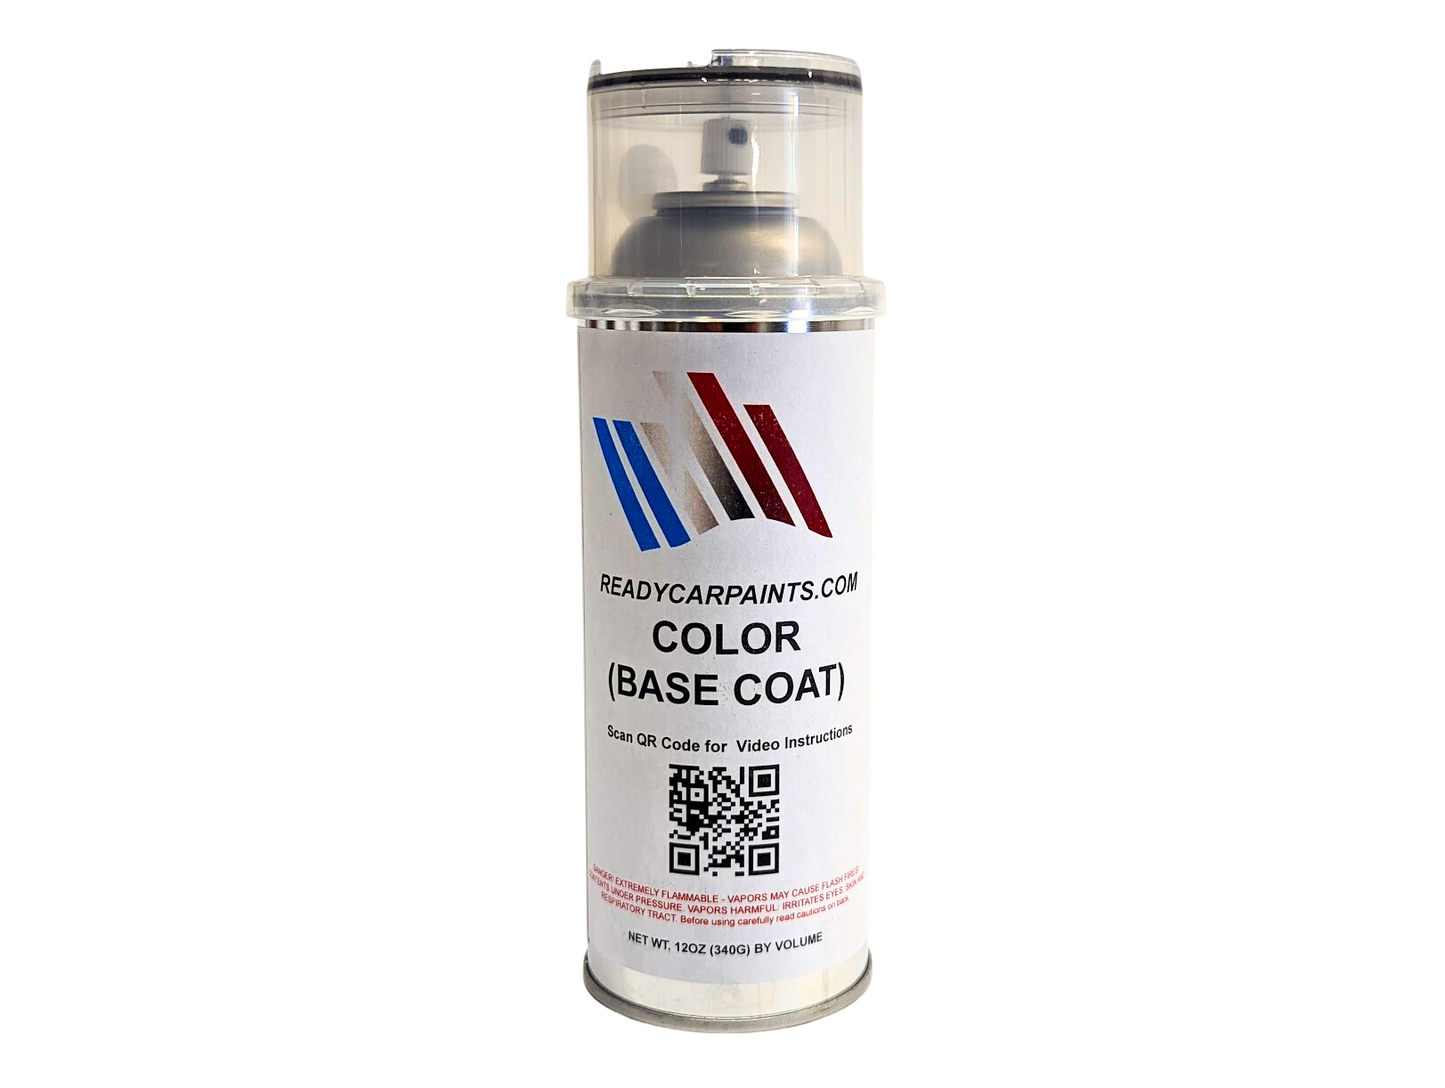 MASERATI 690B Grigio Vulcano Metallic Automotive Spray Paint 100% OEM Color Match